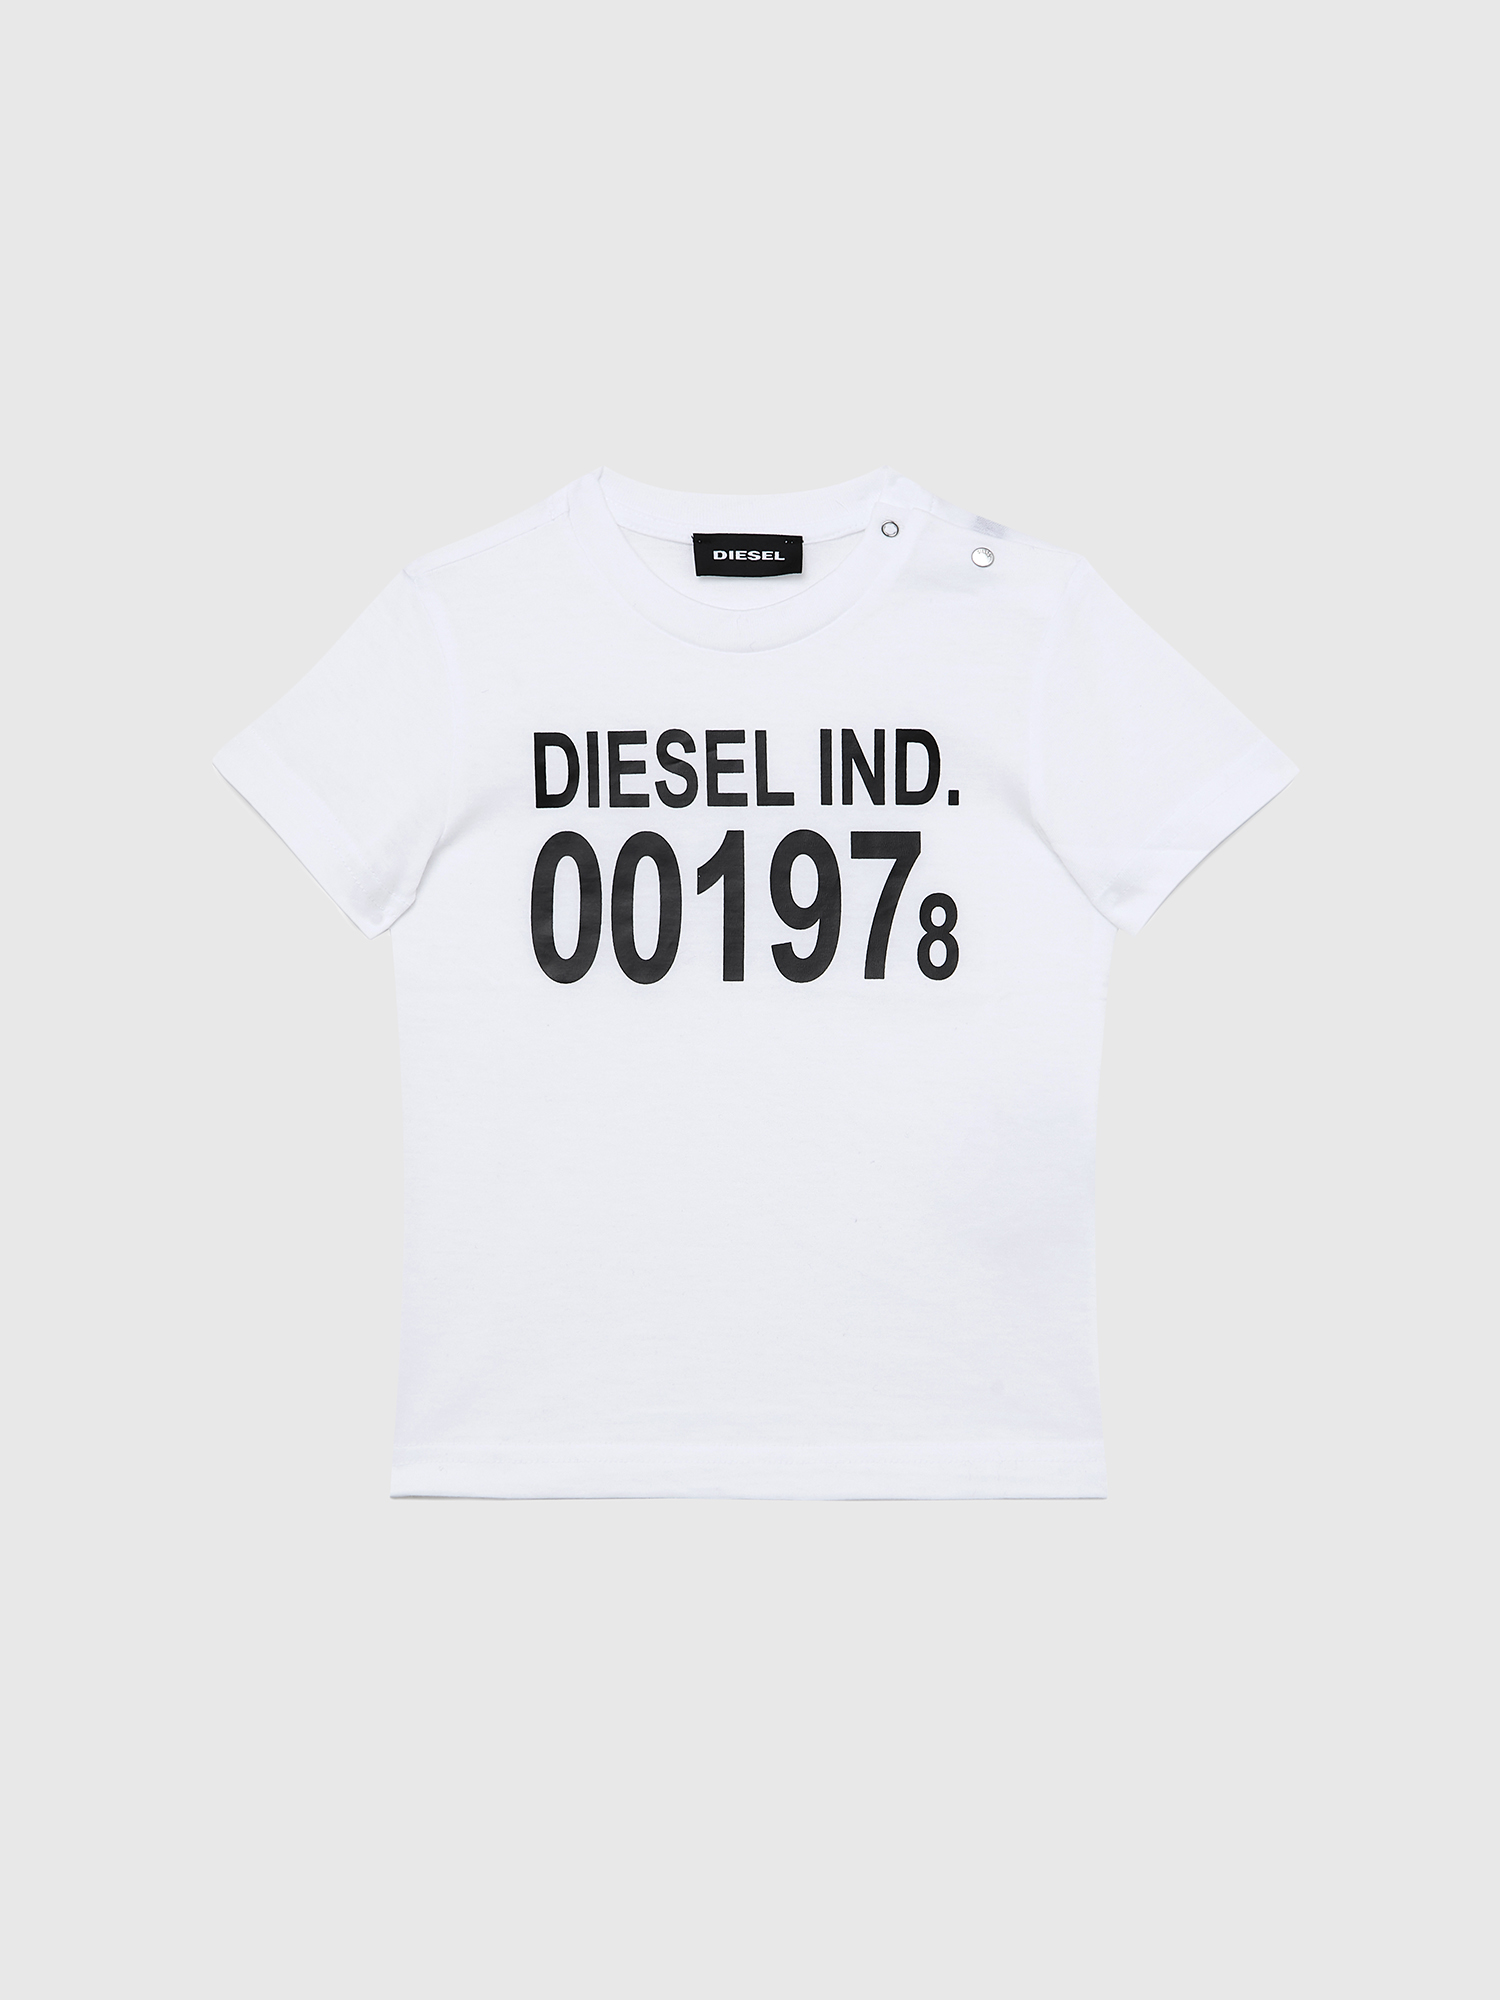 Diesel - TDIEGO001978B, White/Black - Image 1